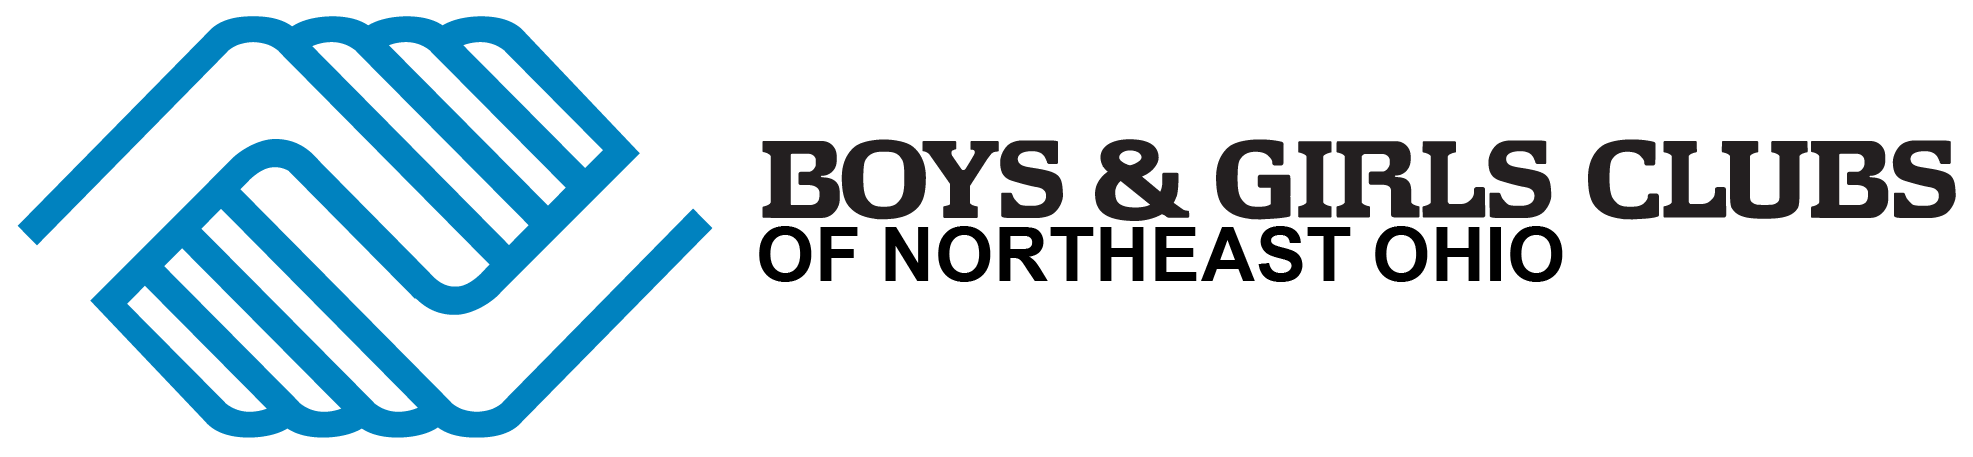 Boys & Girls Clubs of Northeast Ohio logo logo